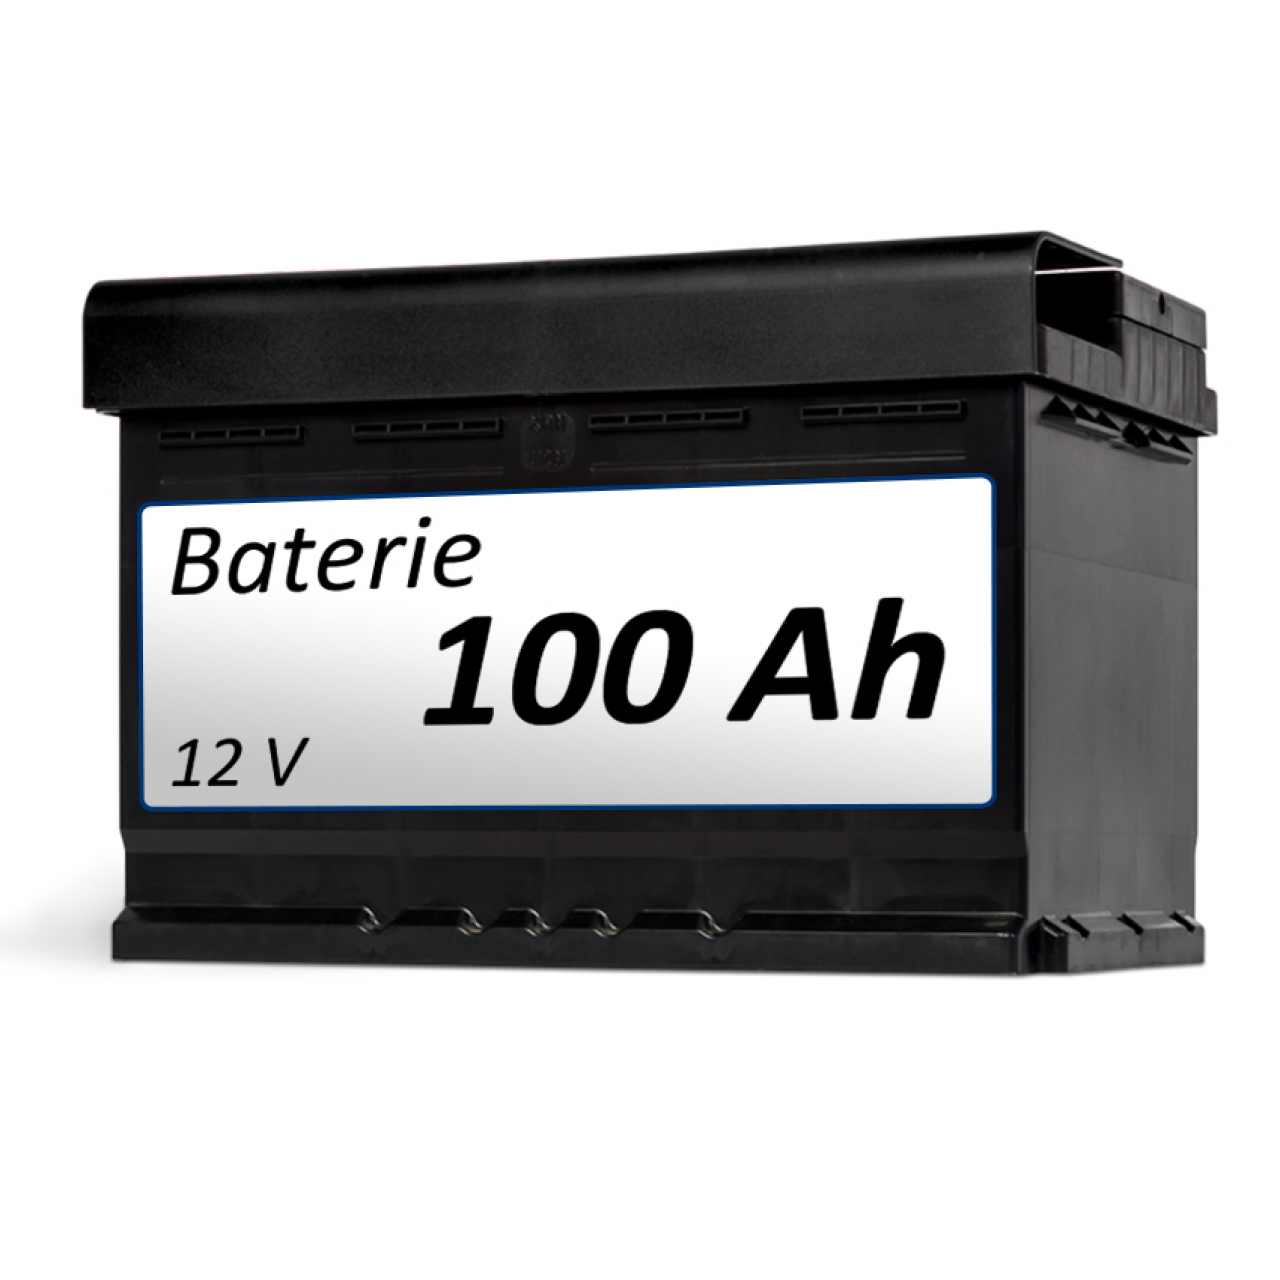 Baterie k elektrickému skútru Baterie 100 Ah - samostatně foto